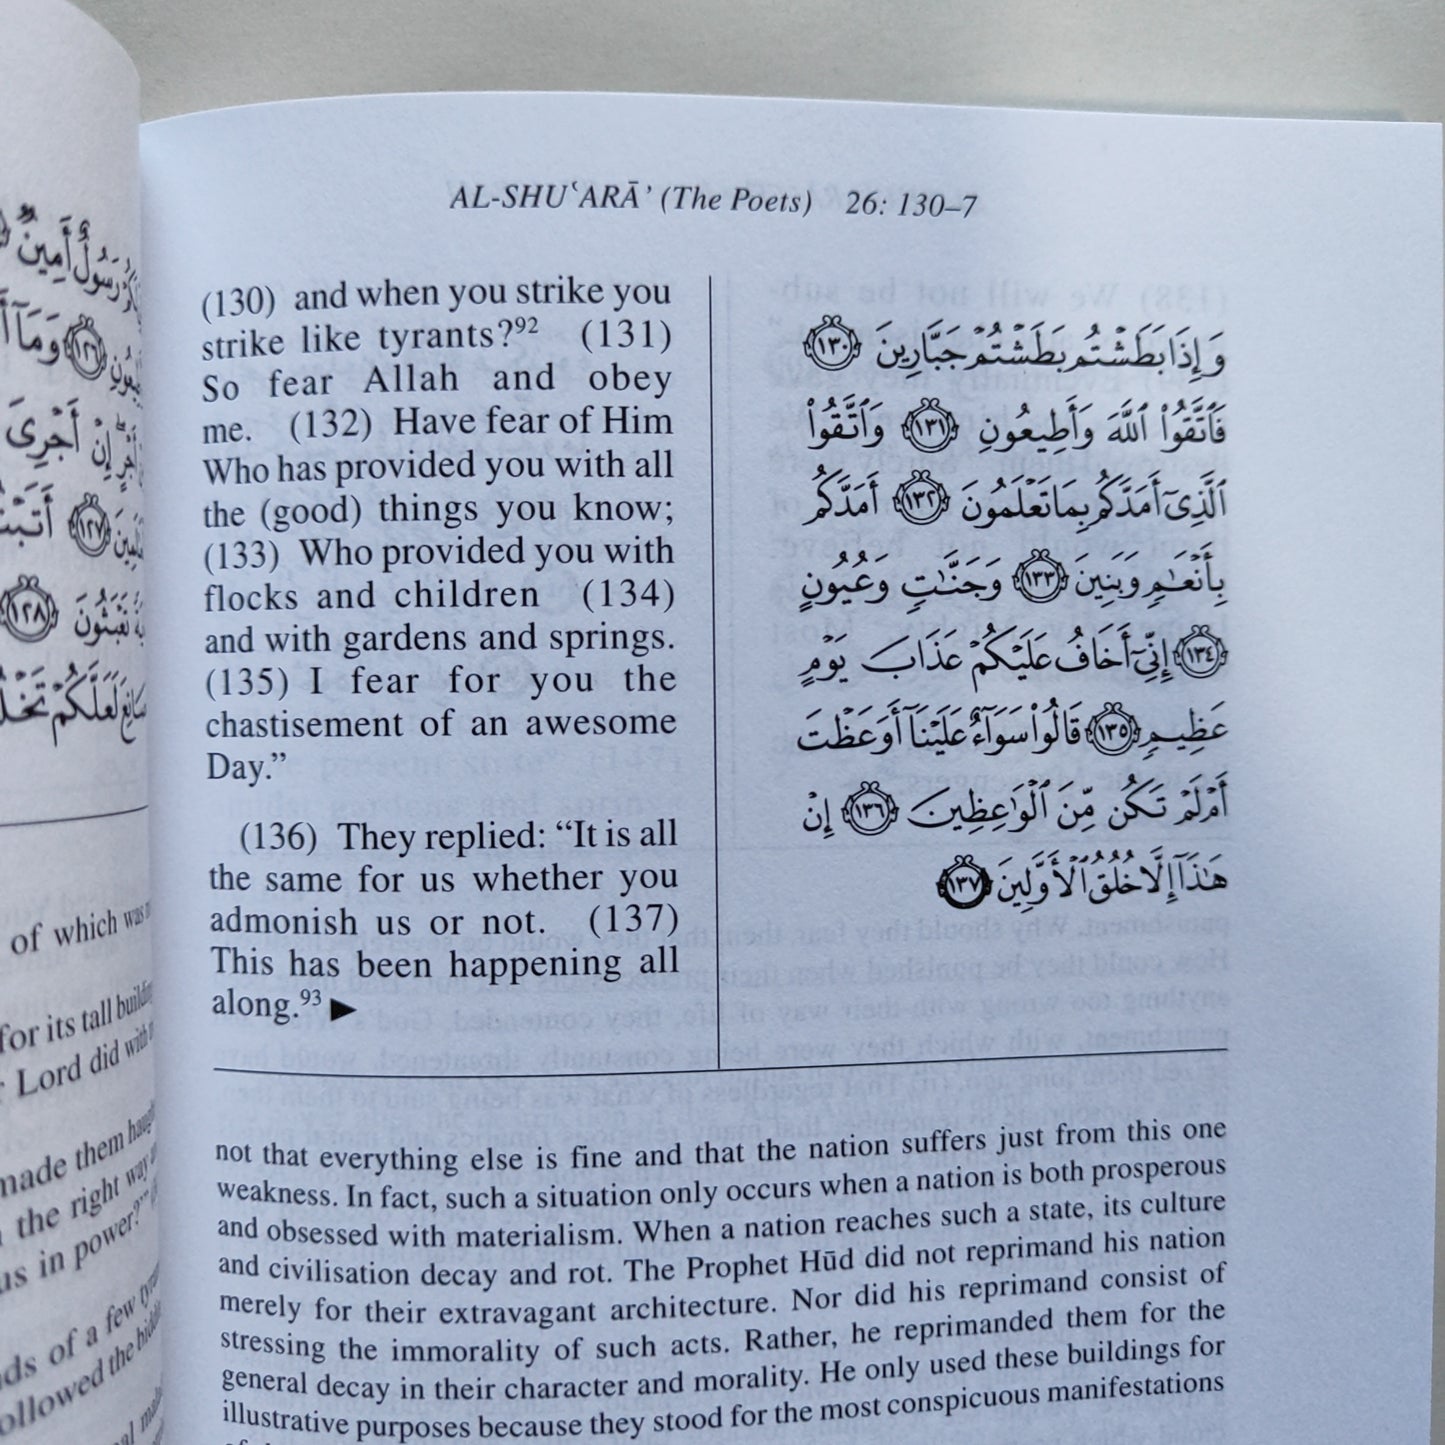 Towards Understanding The Quran (Tafhim Al- Quran) Volume 7